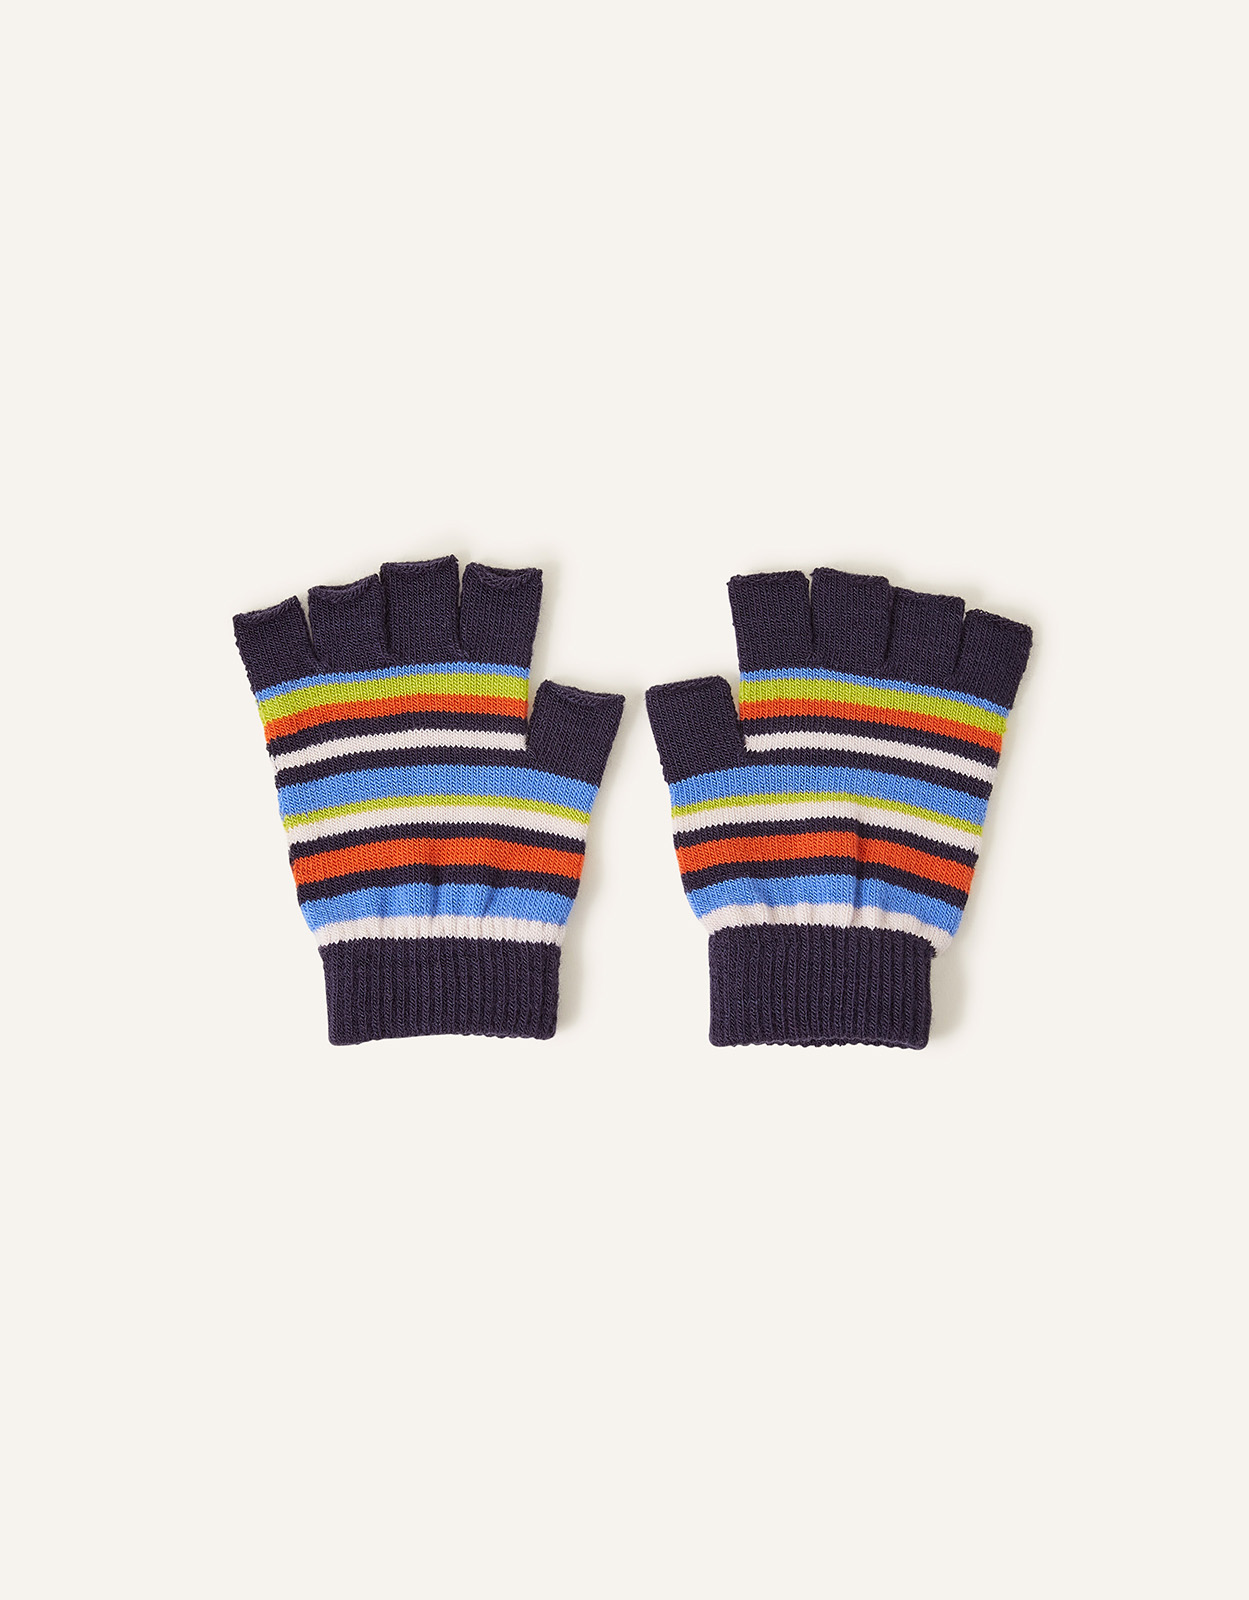 Accessorize Stripe Fingerless Gloves, Size: 9x16cm